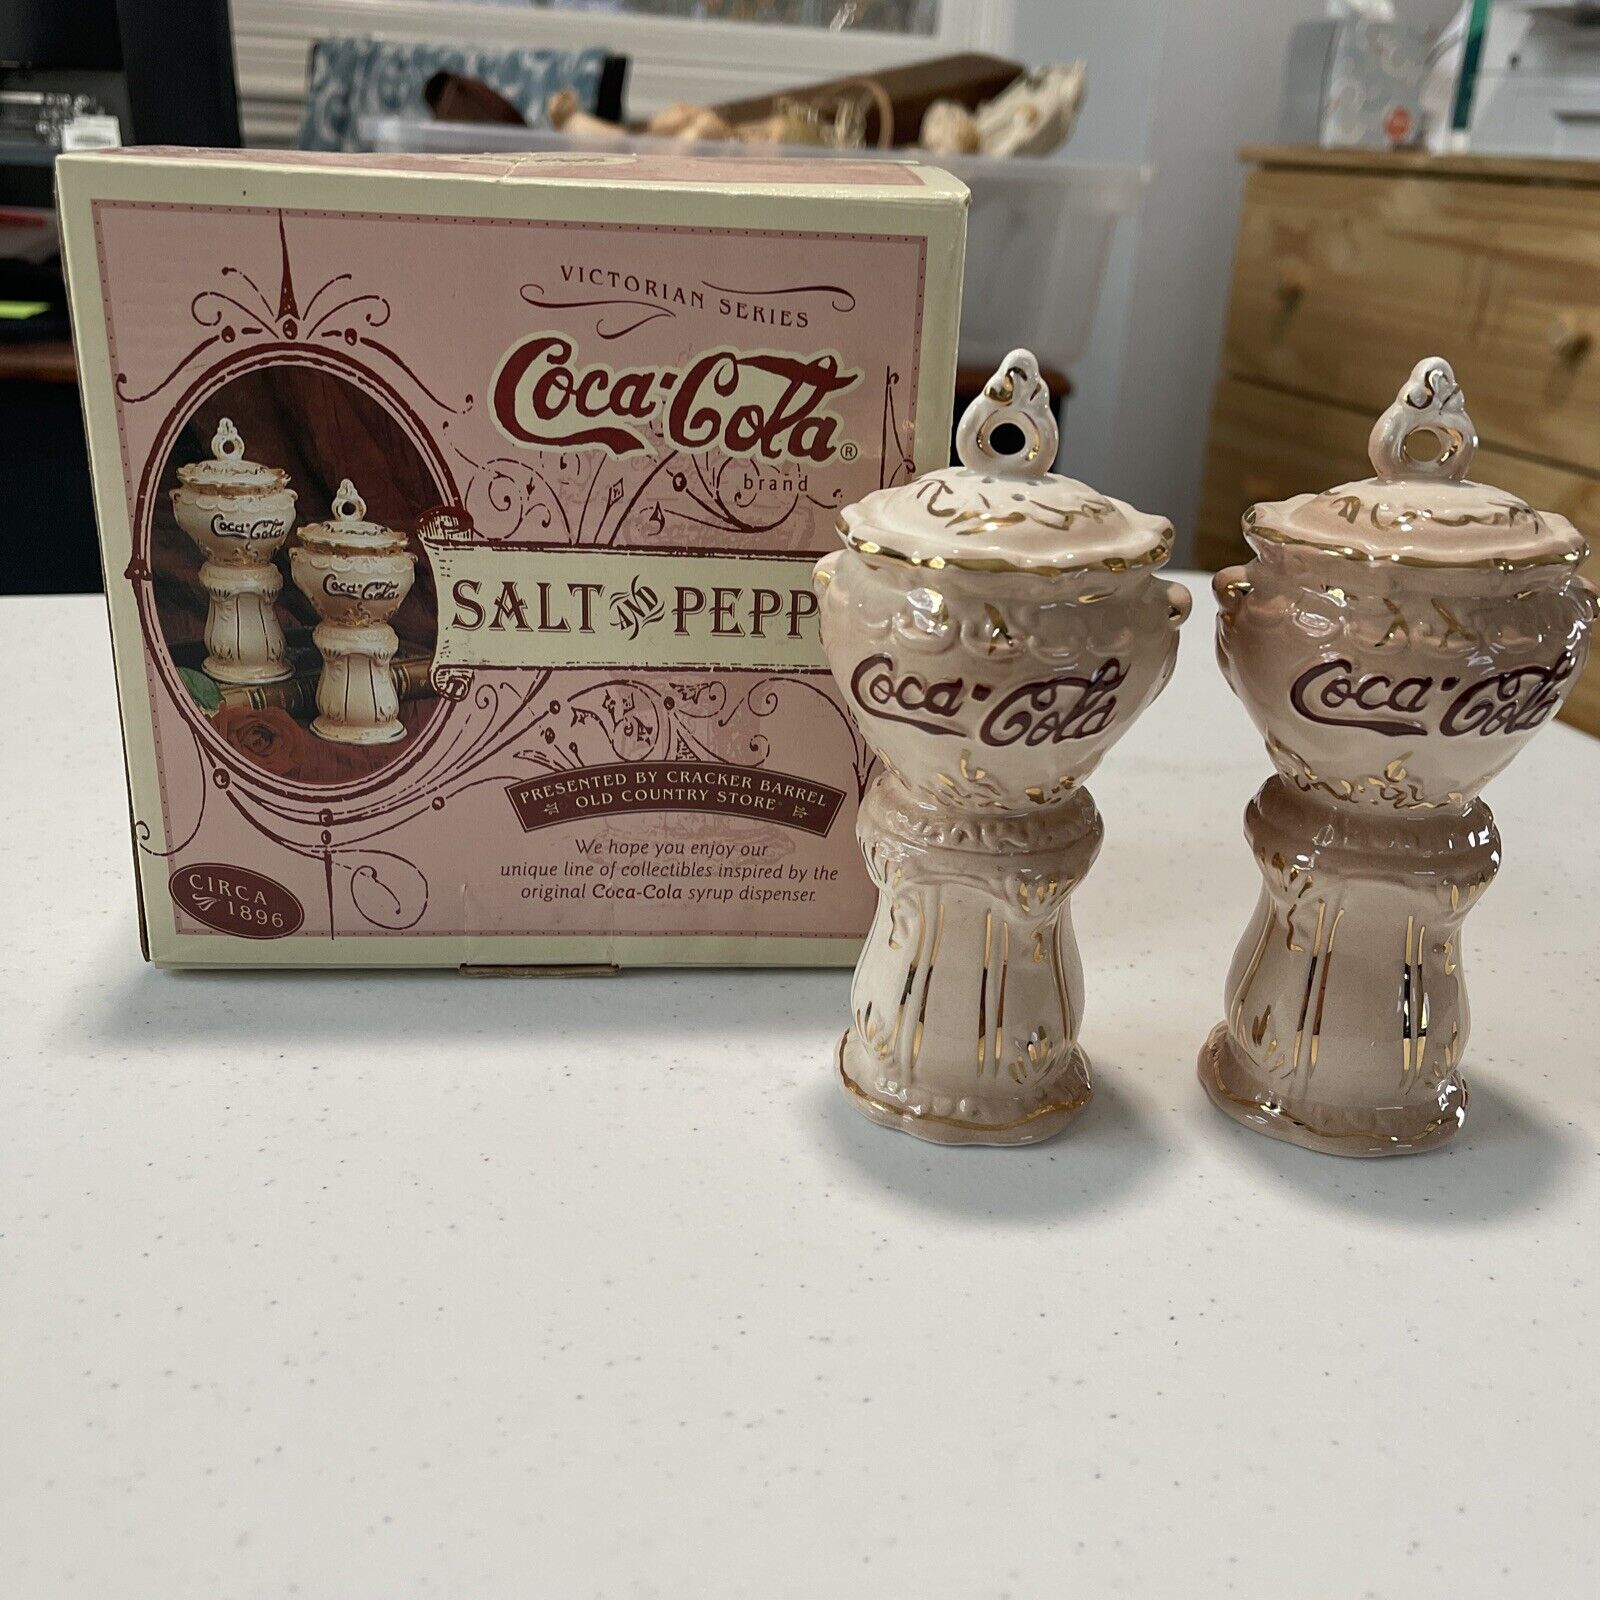 Victorian Series Coca Cola Salt And Pepper Shaker Set From Cracker Barrel 1998